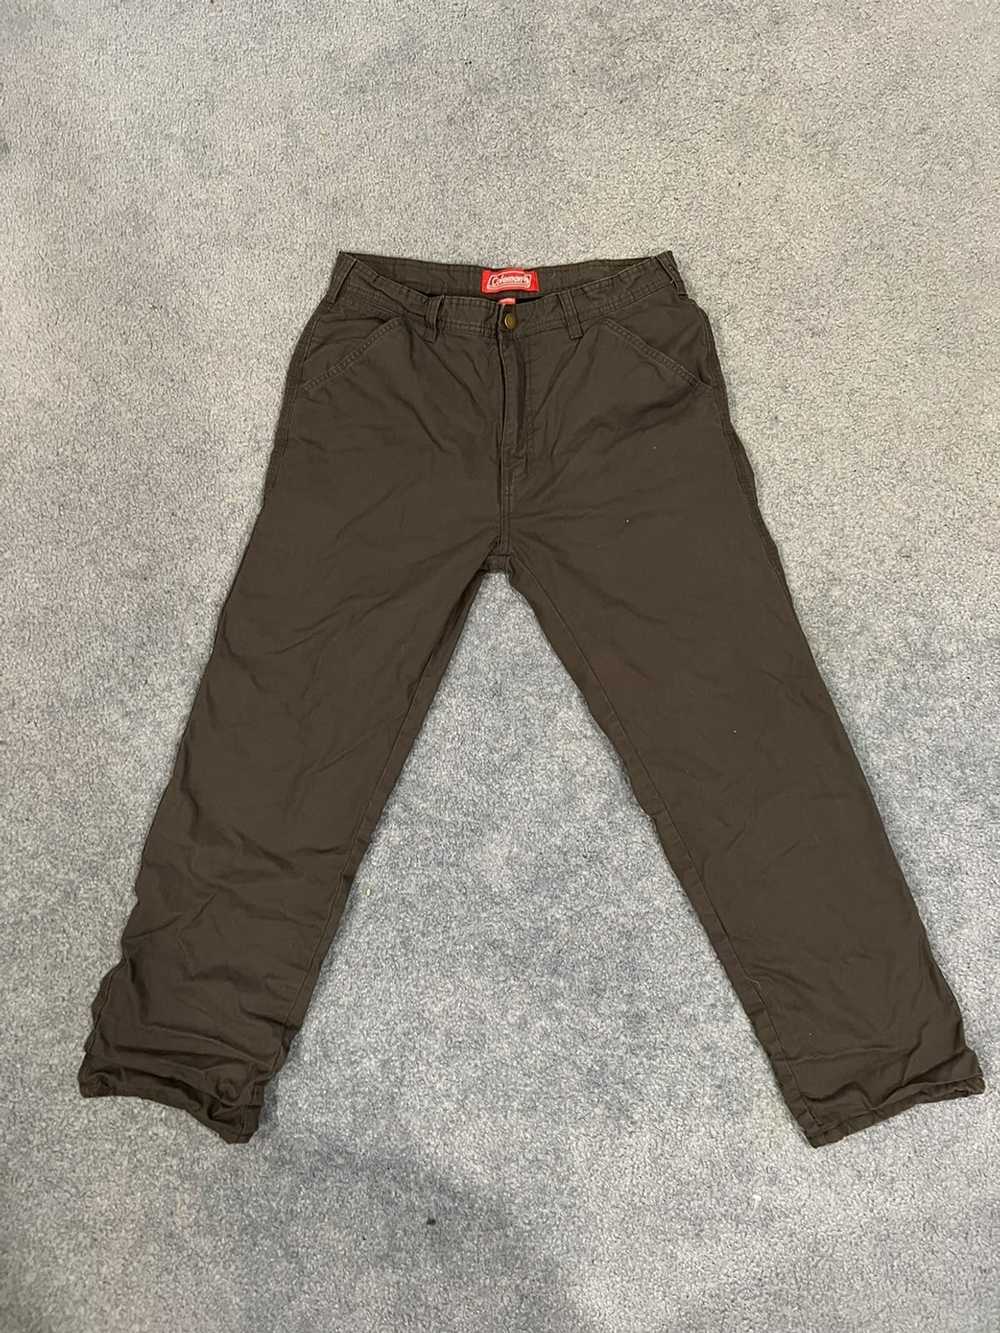 COLEMAN Fleece Lined Pants Mens Actual 38x29 Carpenter Insulated Tan/Brown  Pants